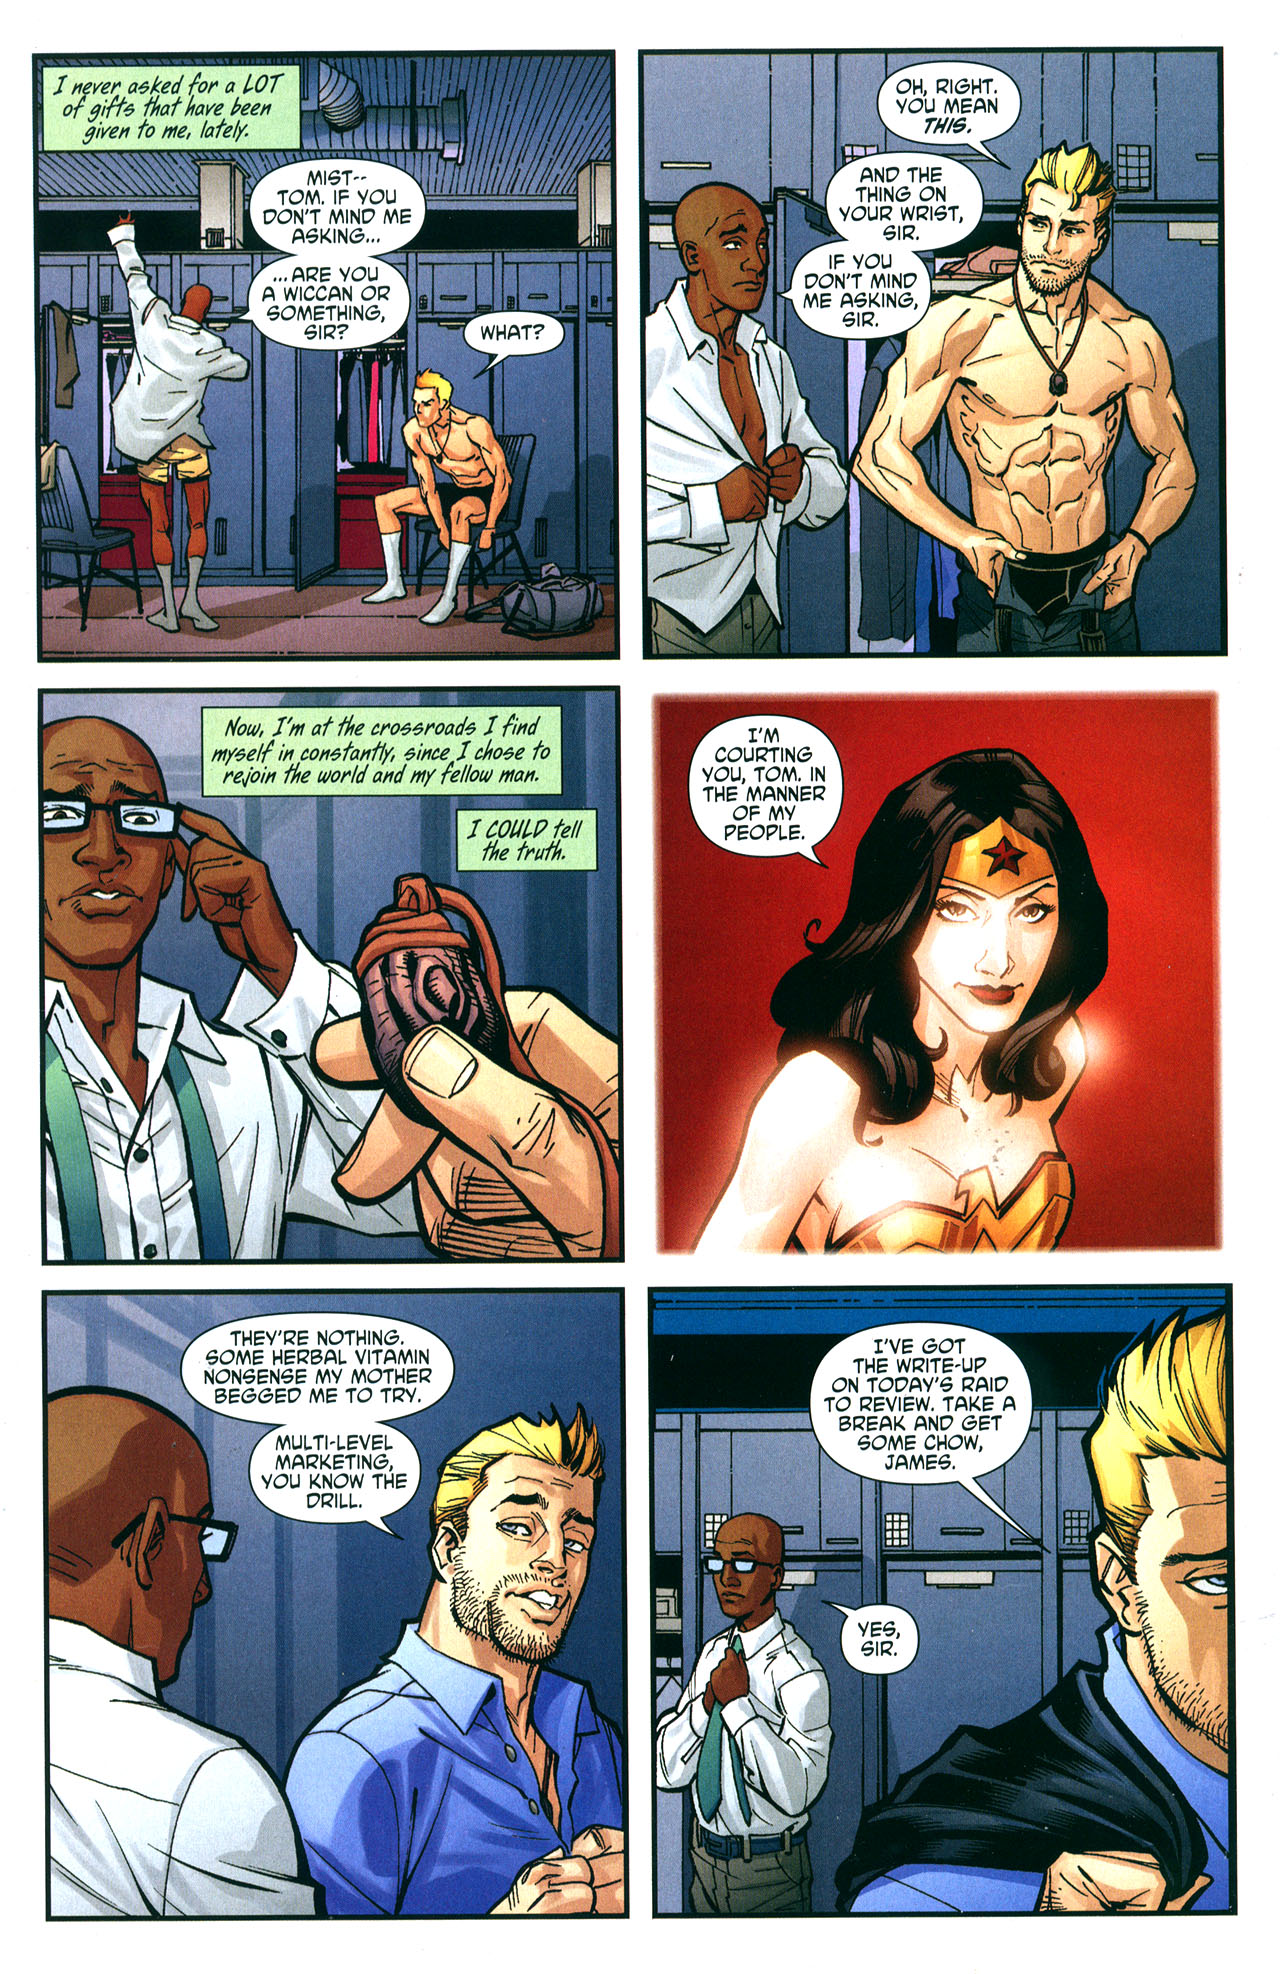 Wonder Woman (2006) 19 Page 6